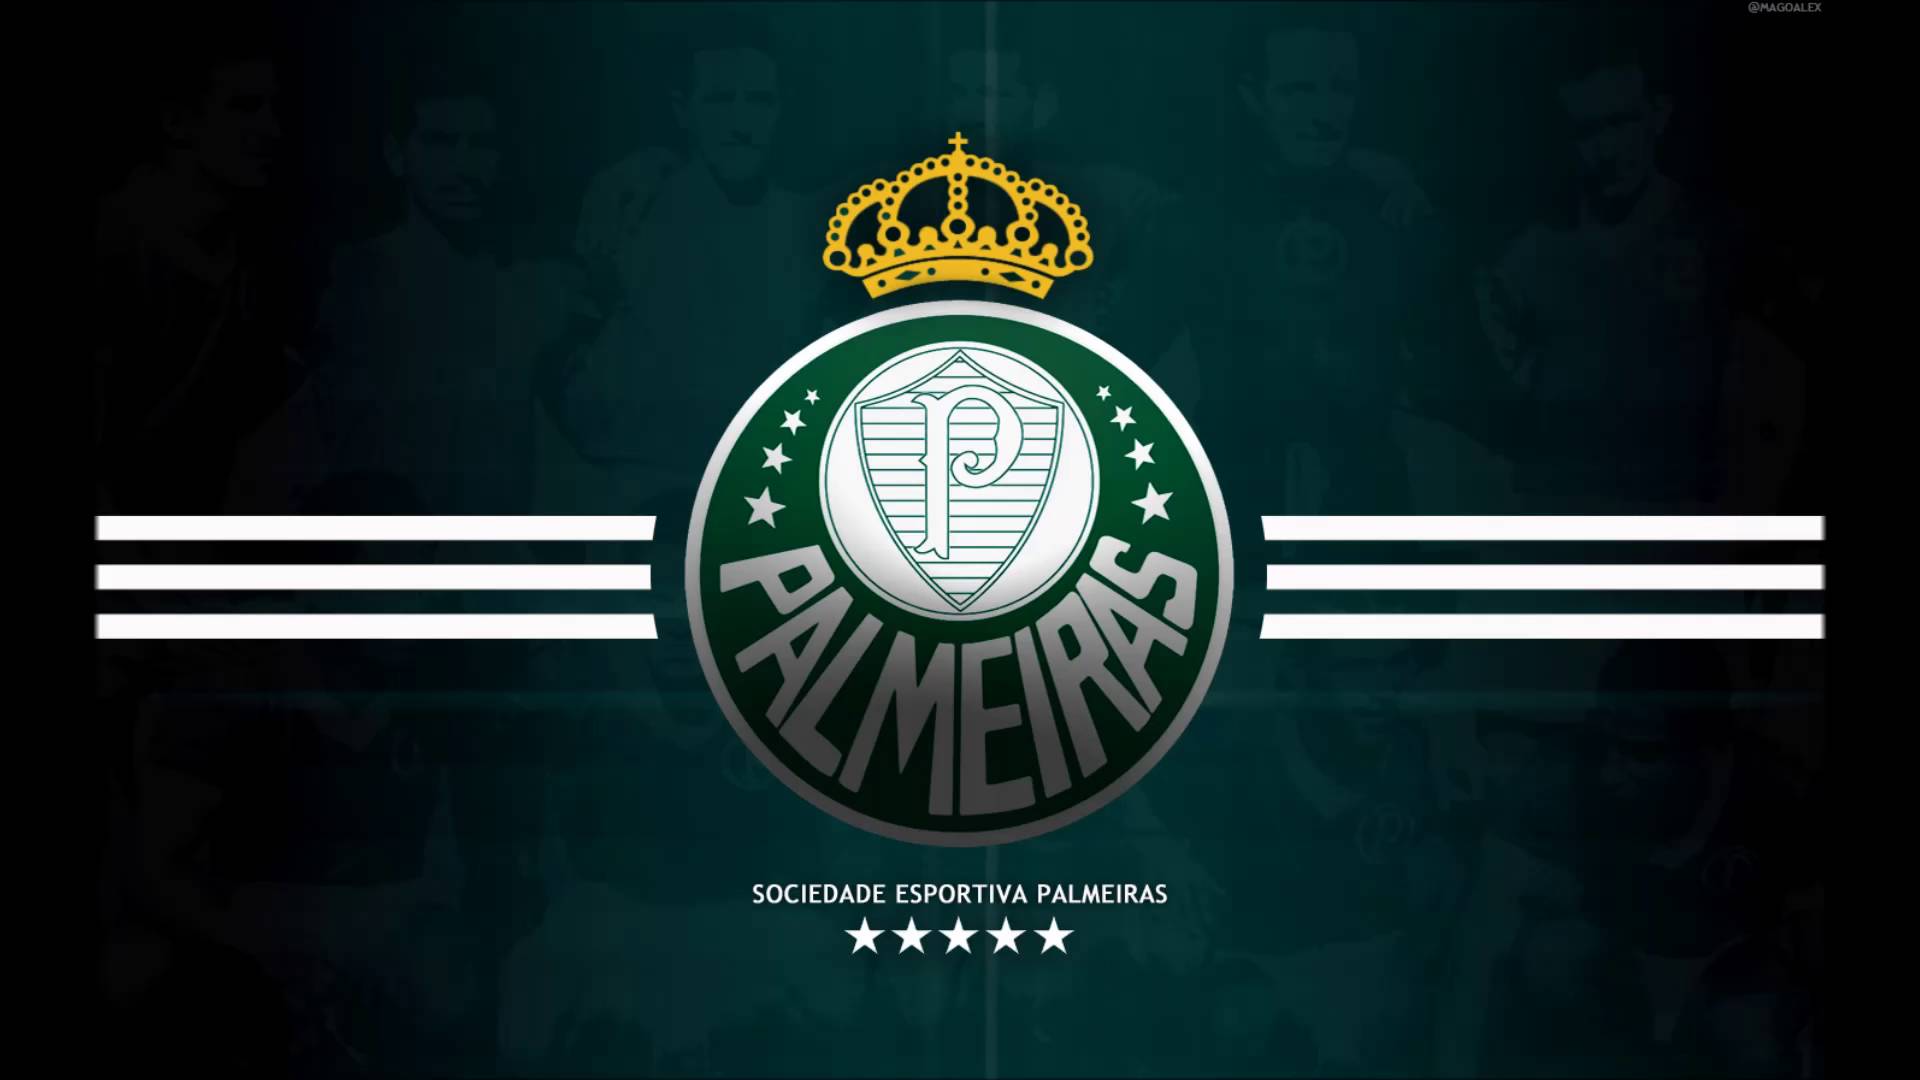 General 1920x1080 Palestra Itália Palmeiras simple background crown sport